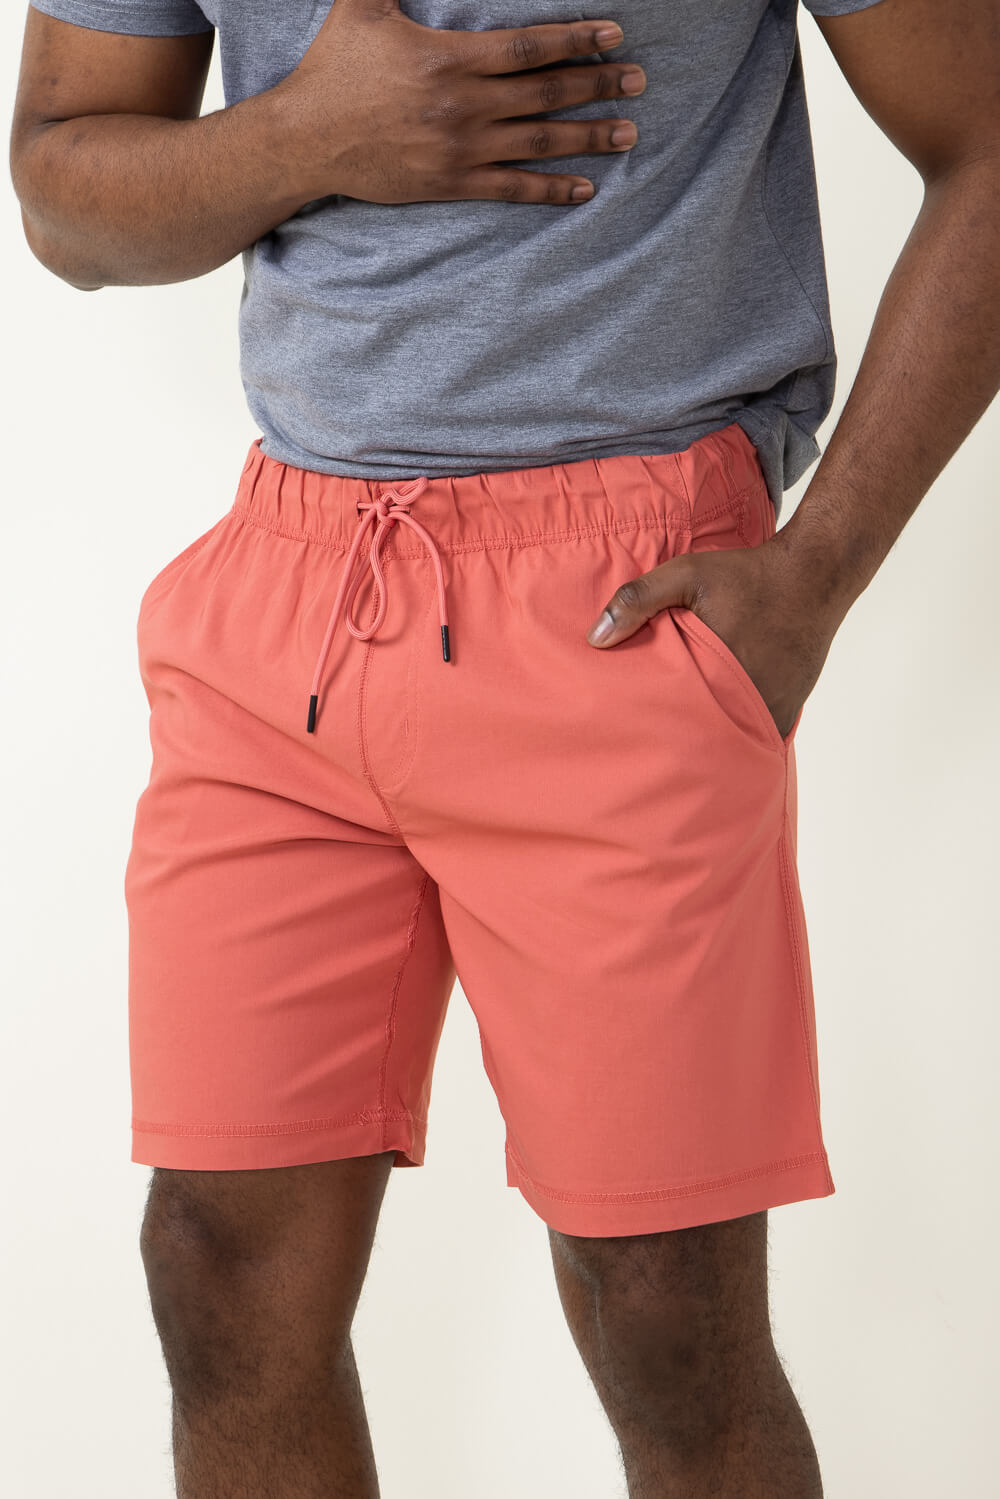 Copper & Oak Tech Pull On Shorts for Men in Red Orange at Glik's , L